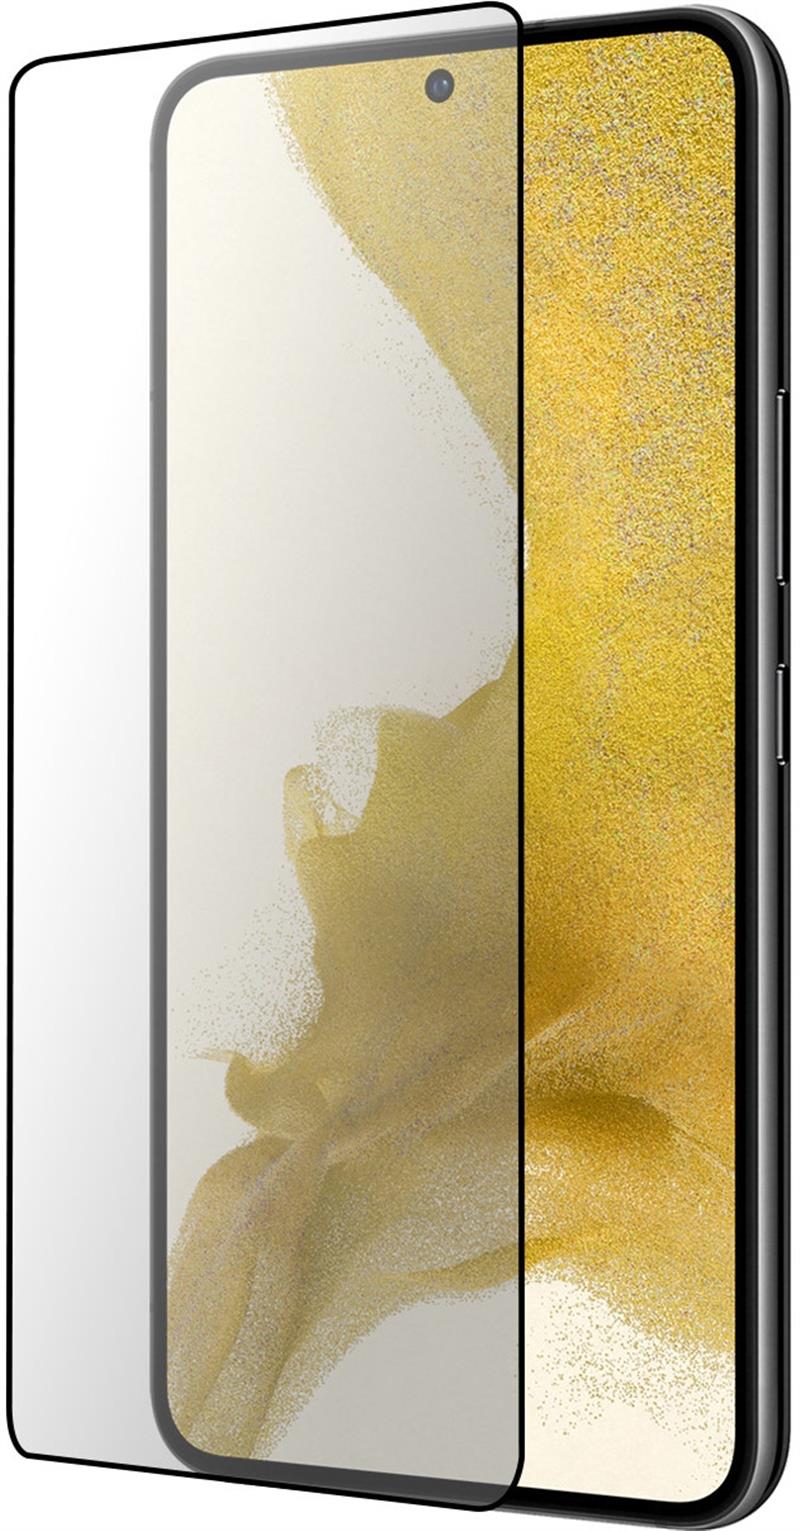 Mobiparts Regular Tempered Glass Samsung Galaxy S22